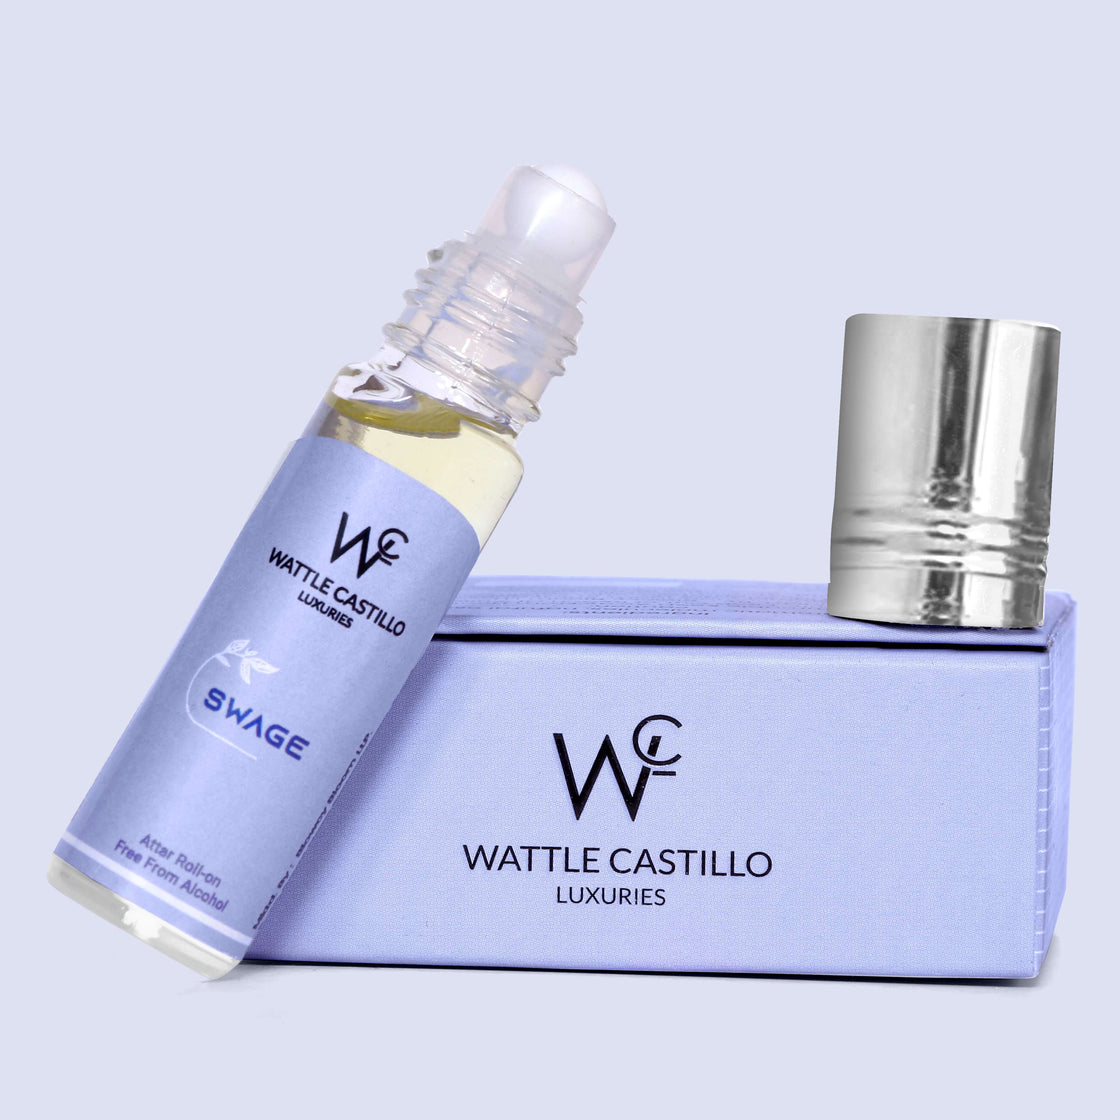 Wattle Castillo Fantasia And Swage Premium Luxury 100% Non Alcoholic Long Lasting Roll On Attar Combo Perfume For Unisex - Wattle Castillo